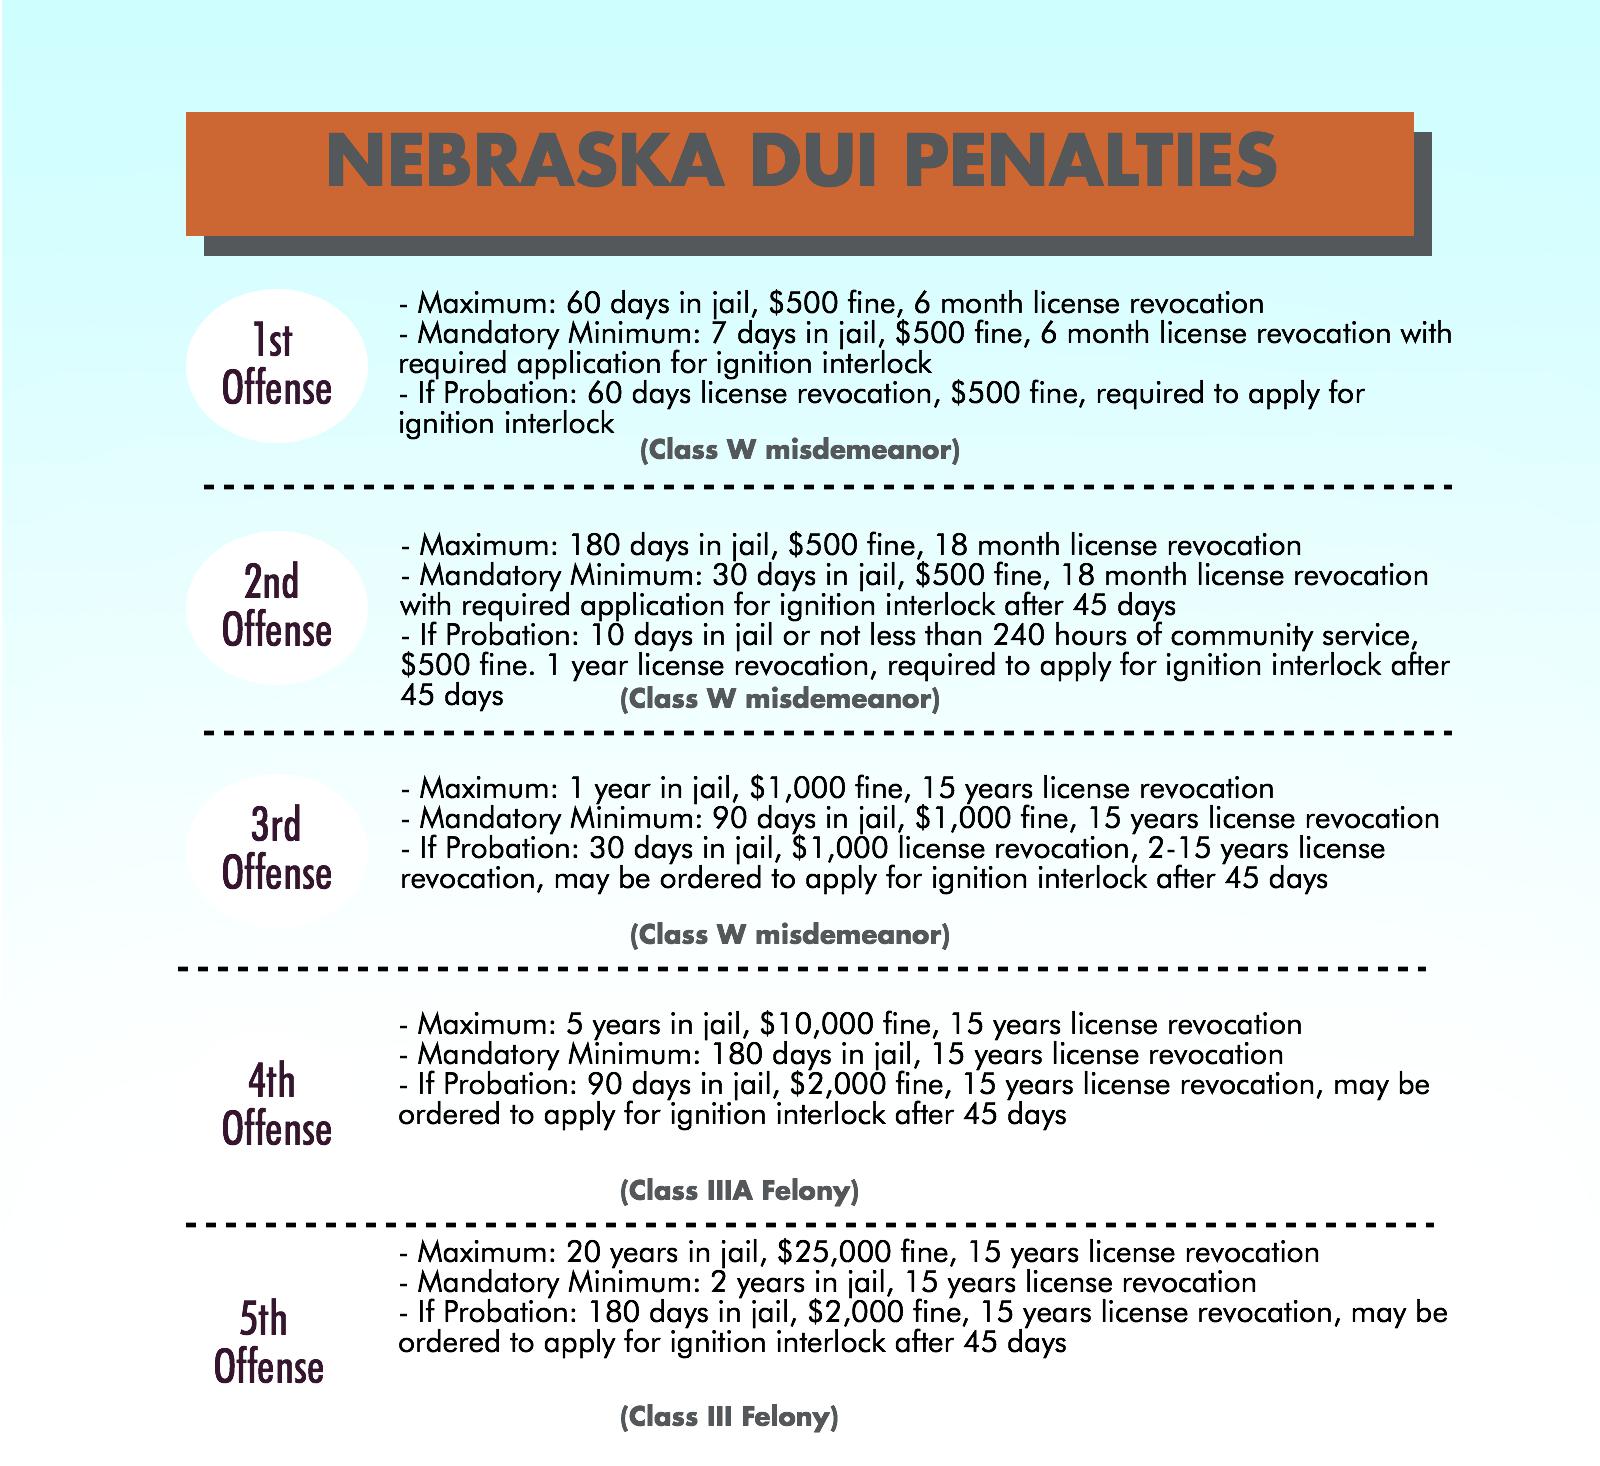 Nebraska DUI Penalties Infographic - Freedom & License on the Line